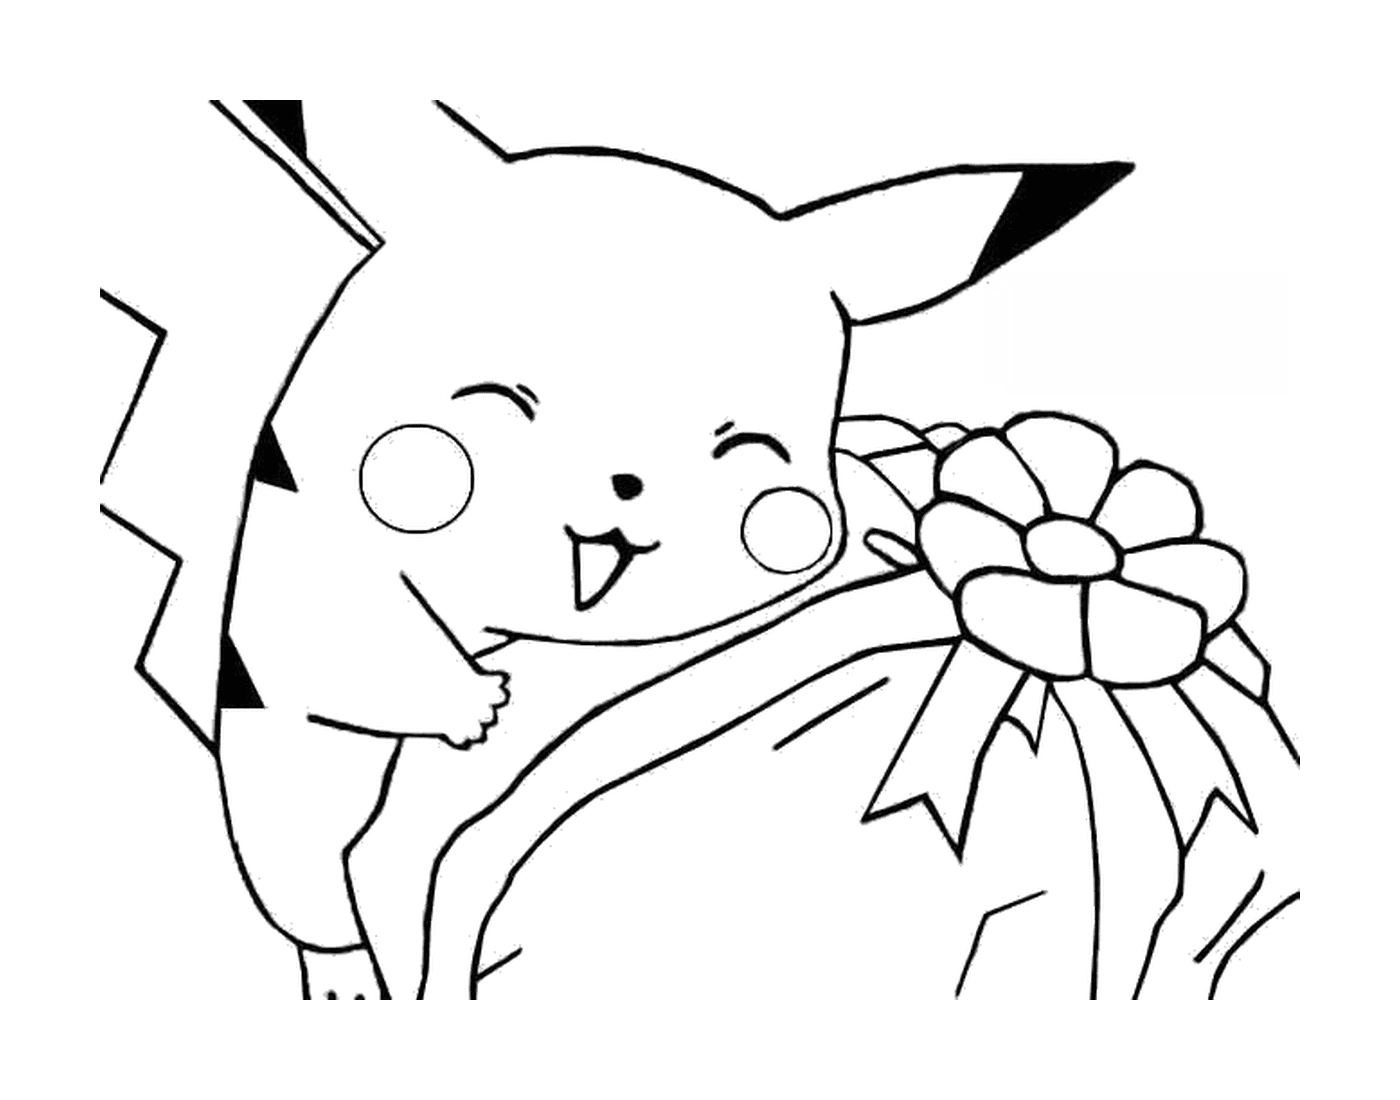  Pikachu ofrece un regalo 